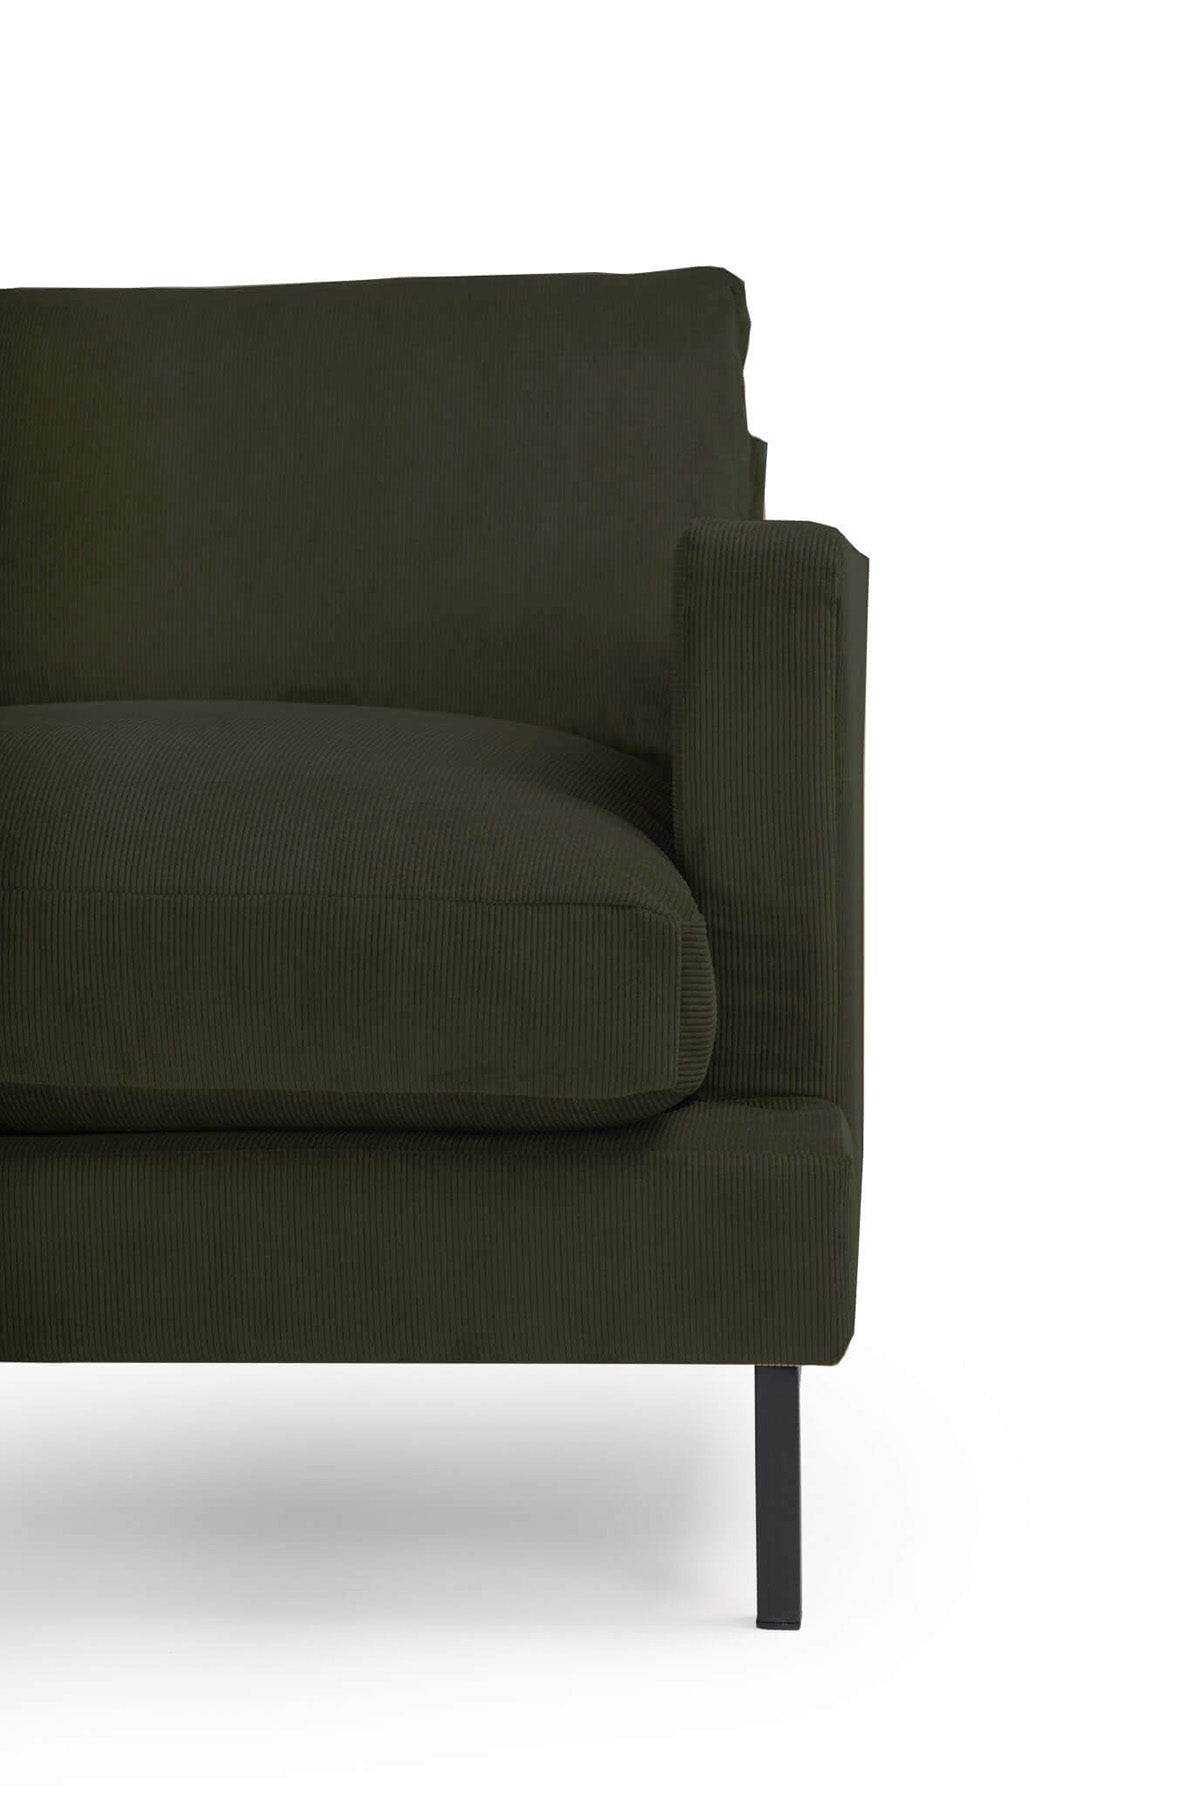 Barcelona | 2,5 Sitzer | Sofa mit Chaise Lounge - Grün | Samt Stoff - Links